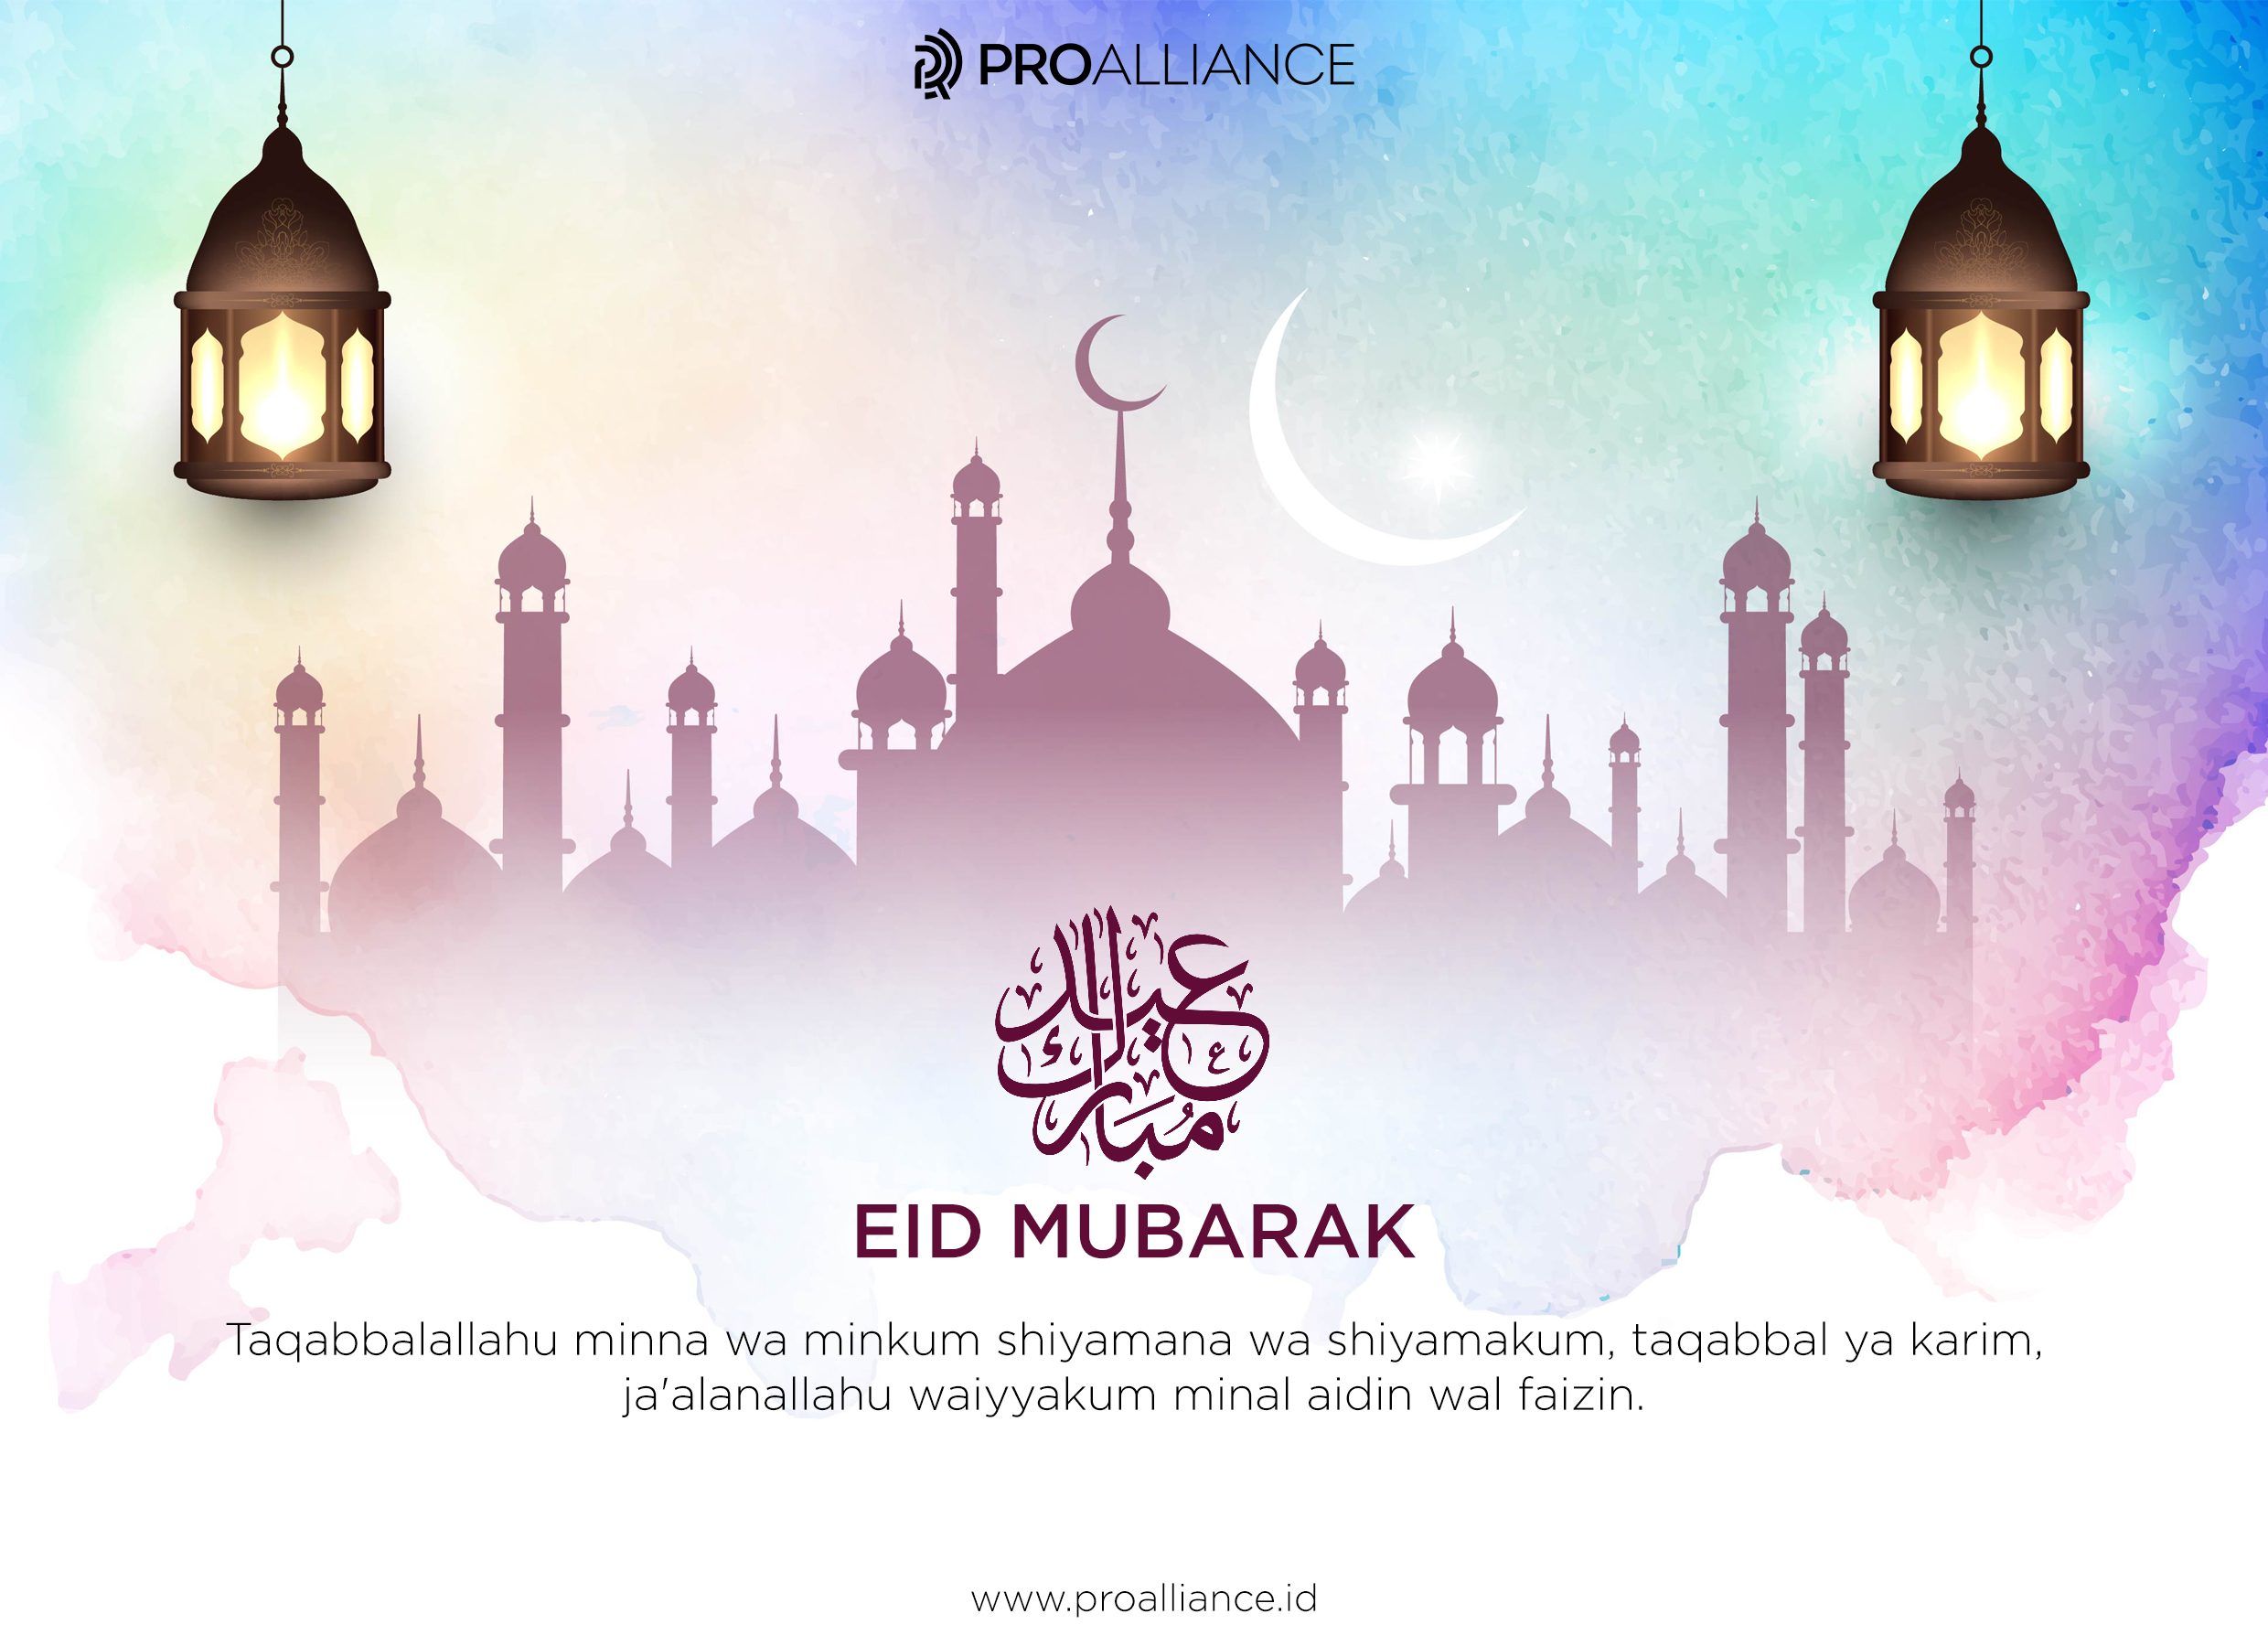 eid-mubarak-1441h-proalliance